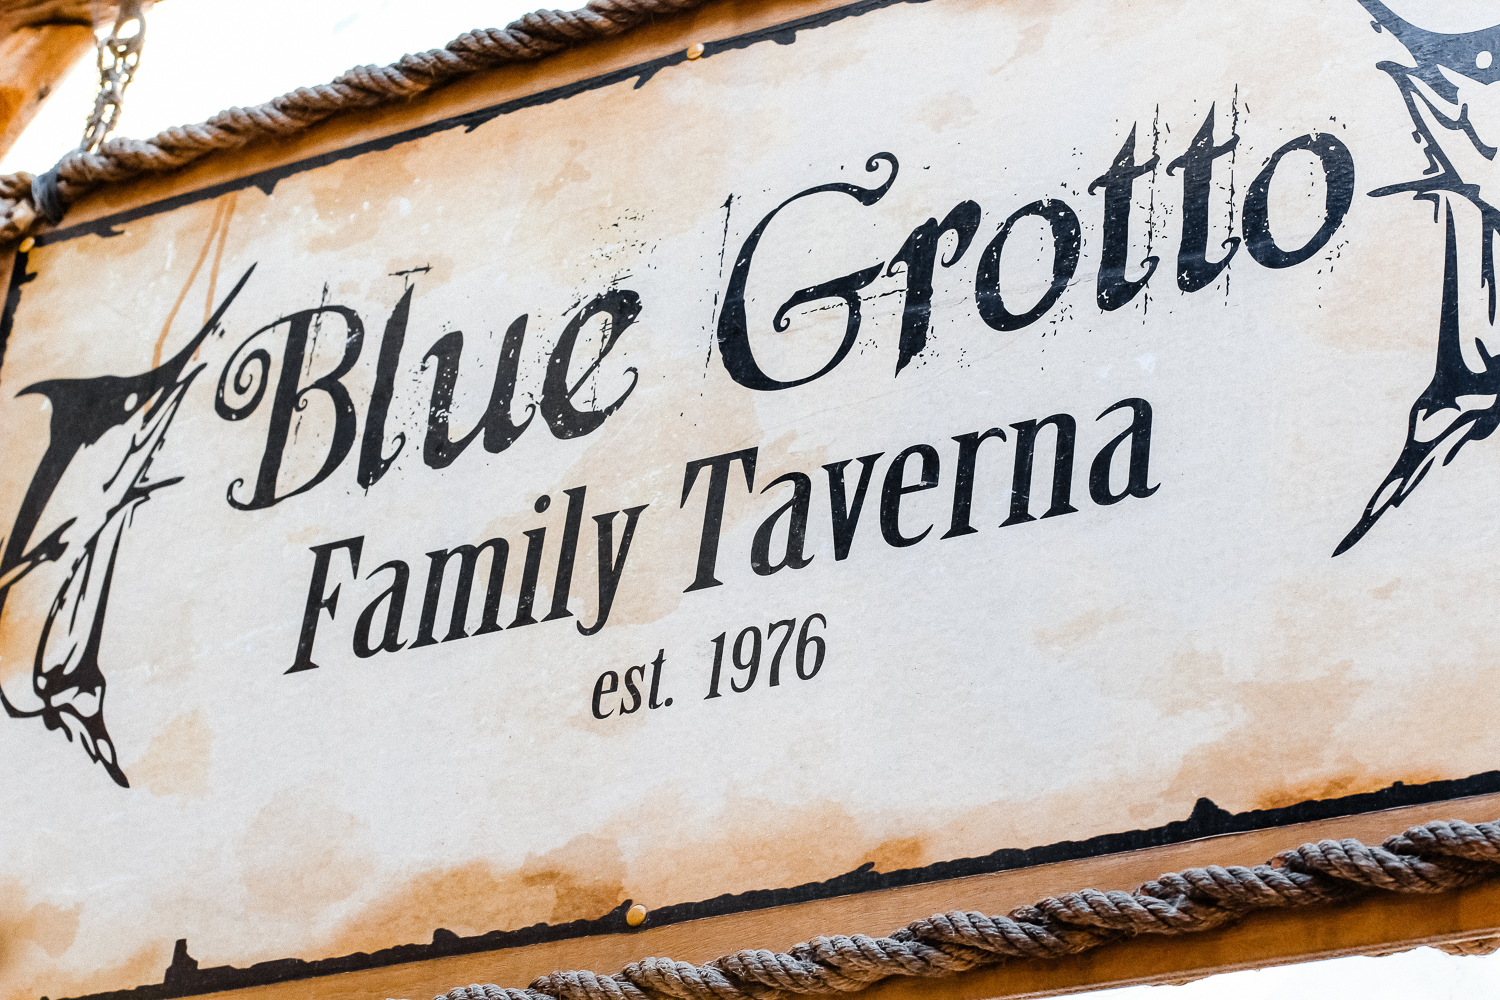 blue grotto family taverna paxos island greece